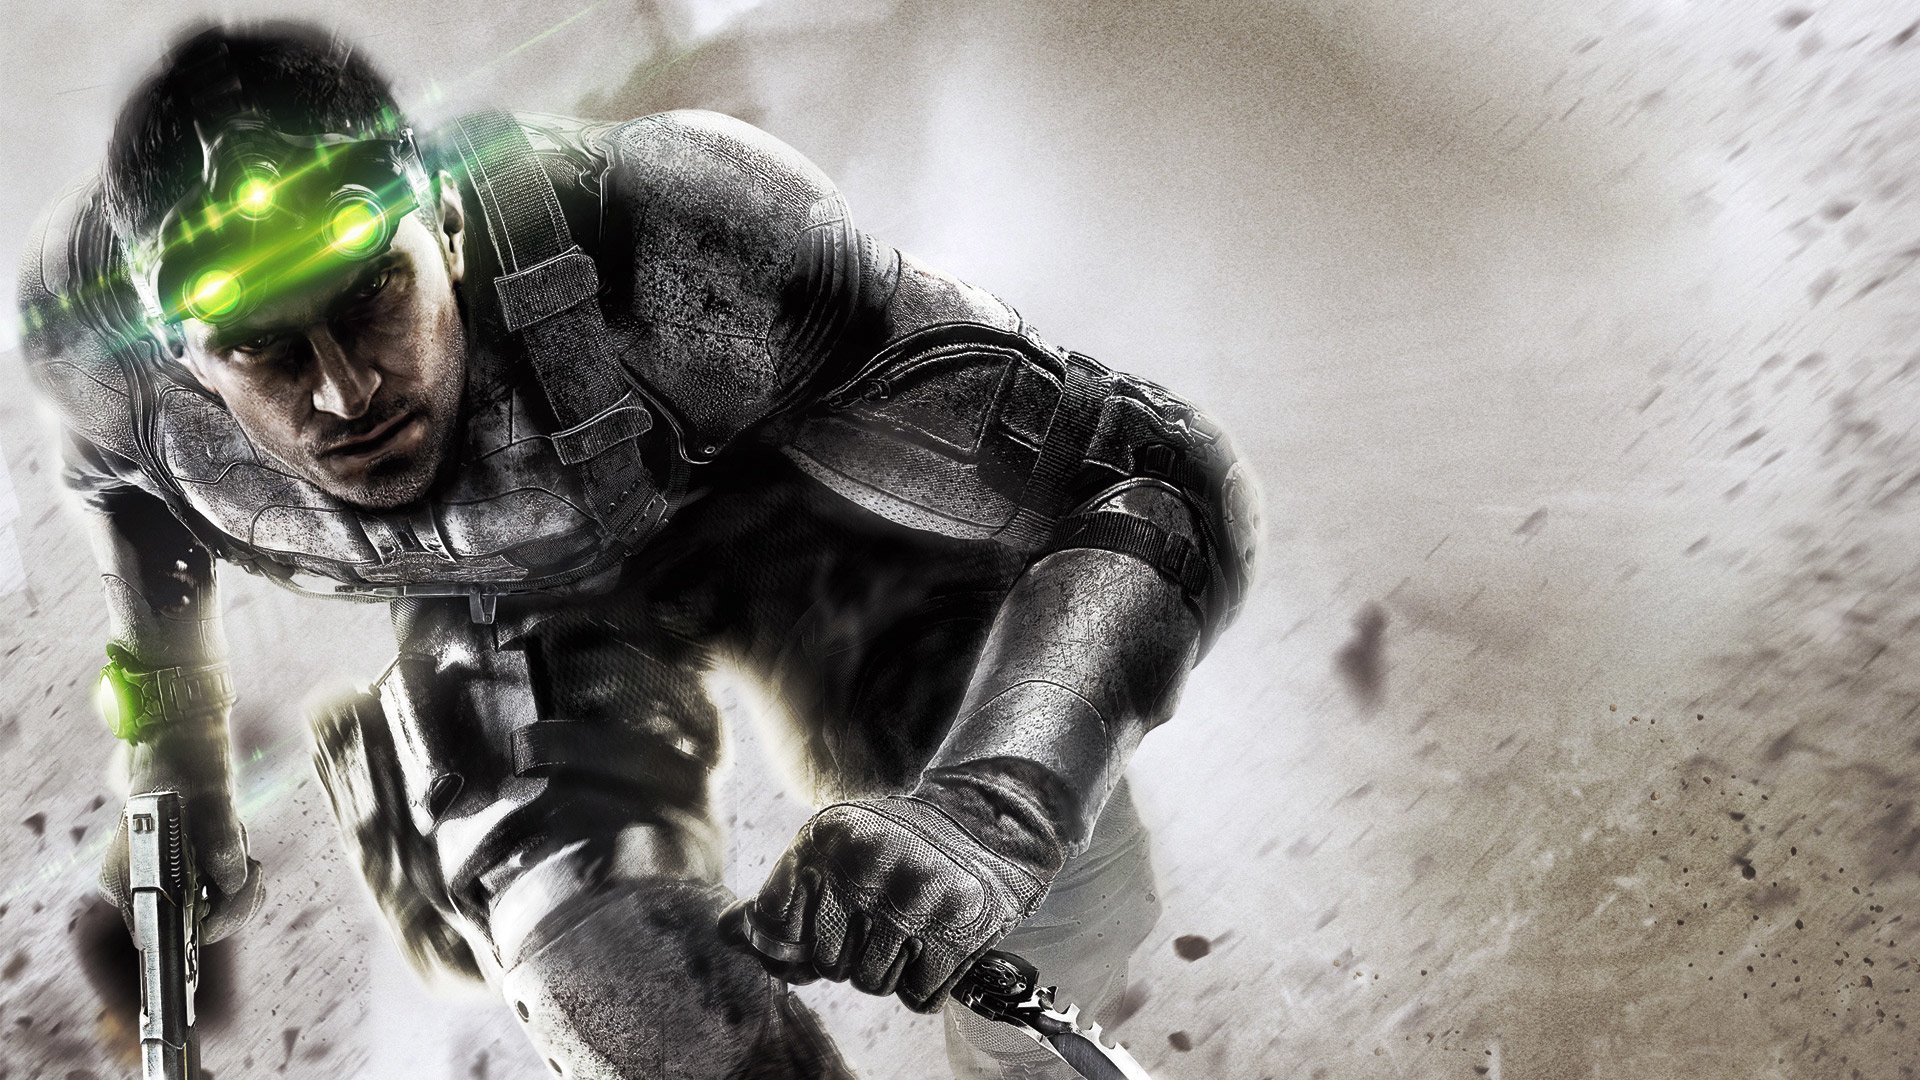 promo image for 2013's Splinter Cell Blacklist